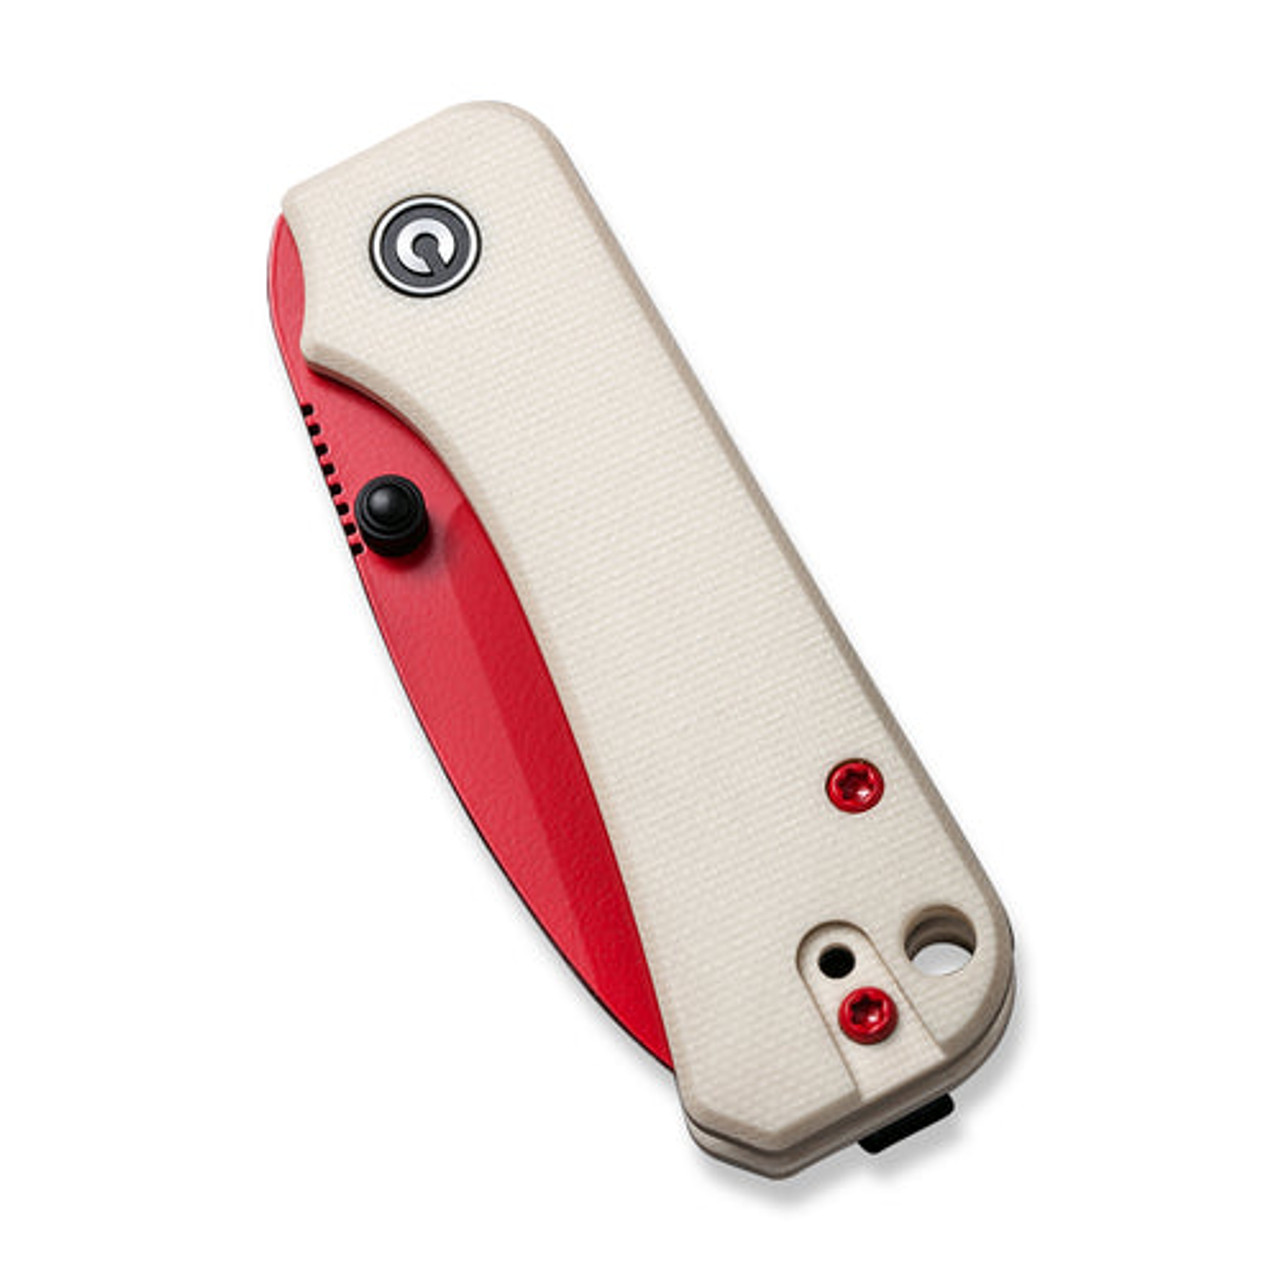 Civivi Baby Banter Thumb Stud Knife (C19068S-7) 2.34" Red Coated Nitro-V Drop Point Blade, Ivory G10 Handle